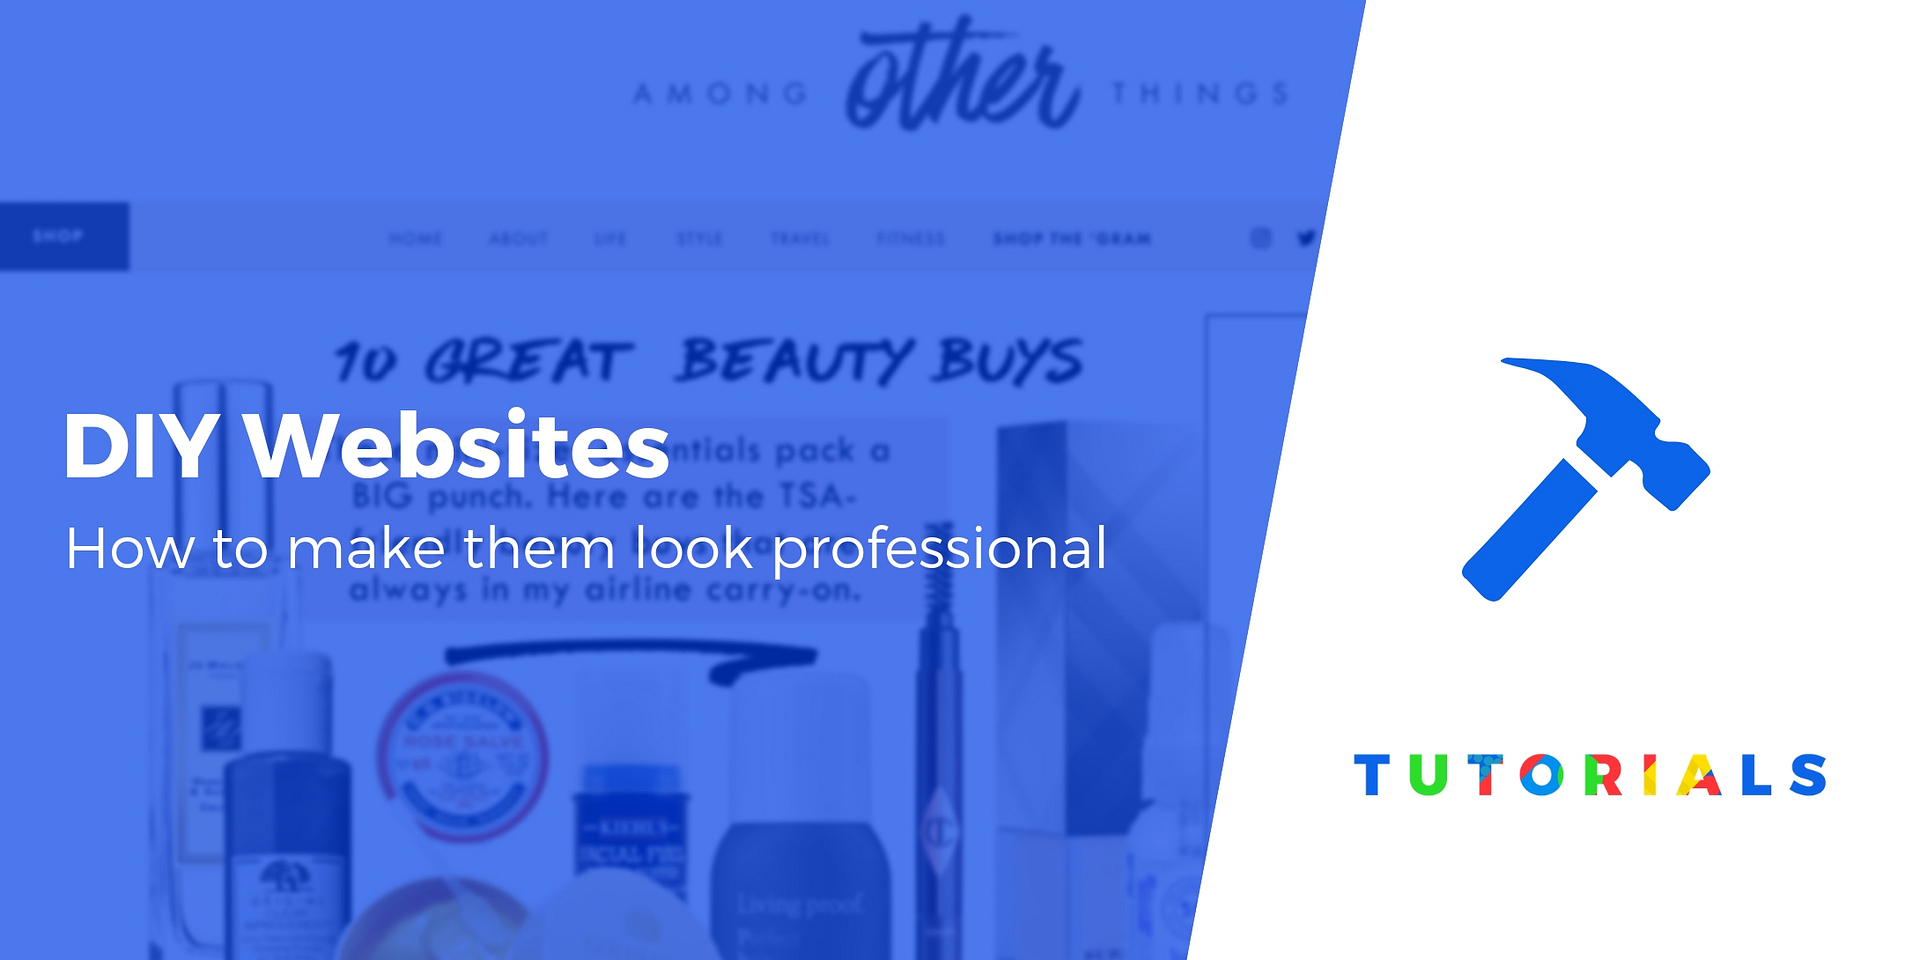 Diy Websites 10 Web Design Tips That Make Your Site Look Professional